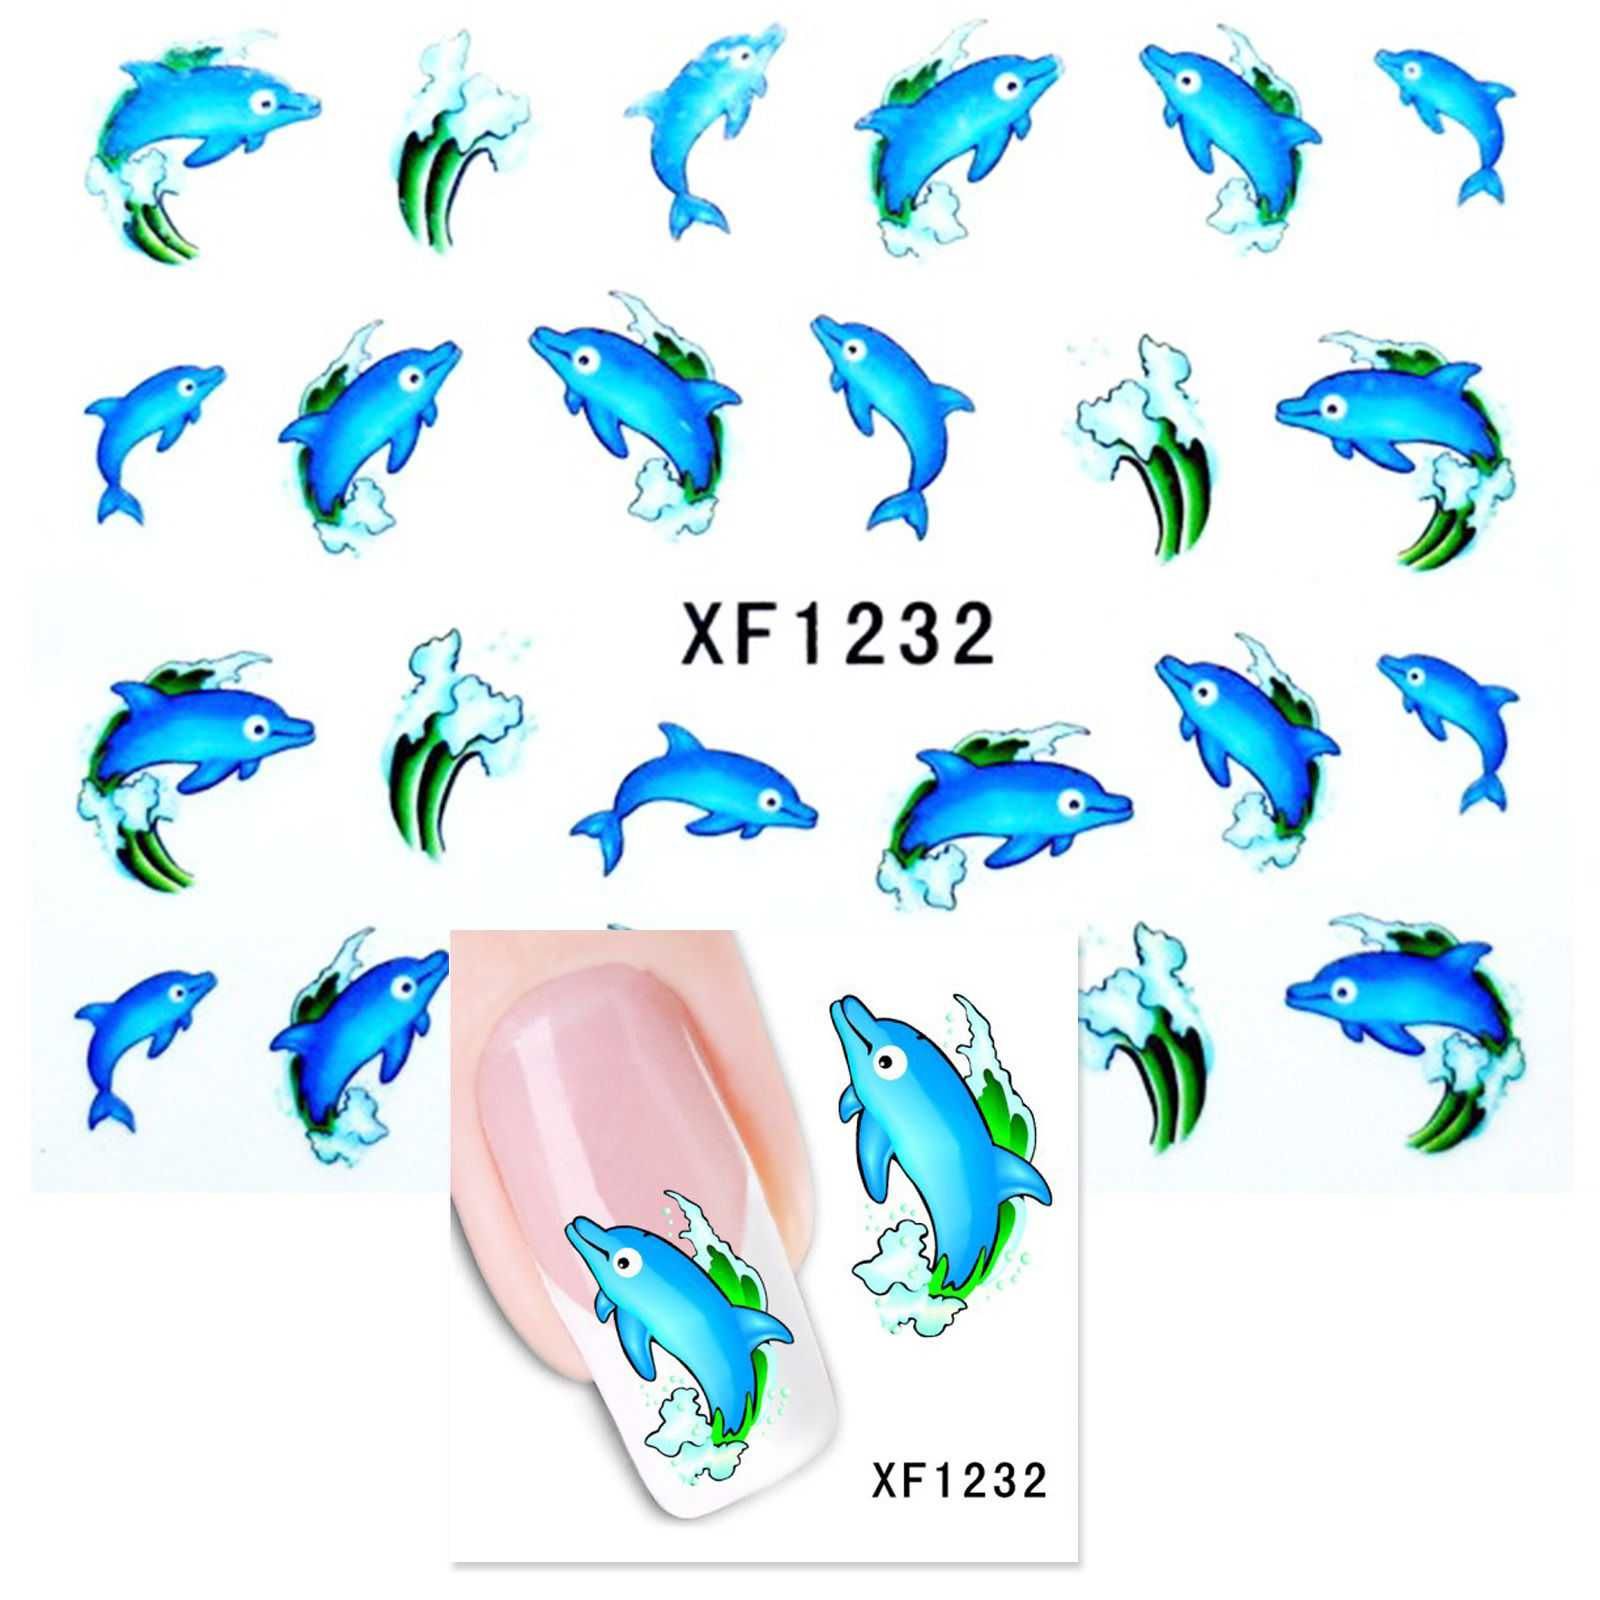 Abtibilduri (stickere) cu delfini - diverse modele